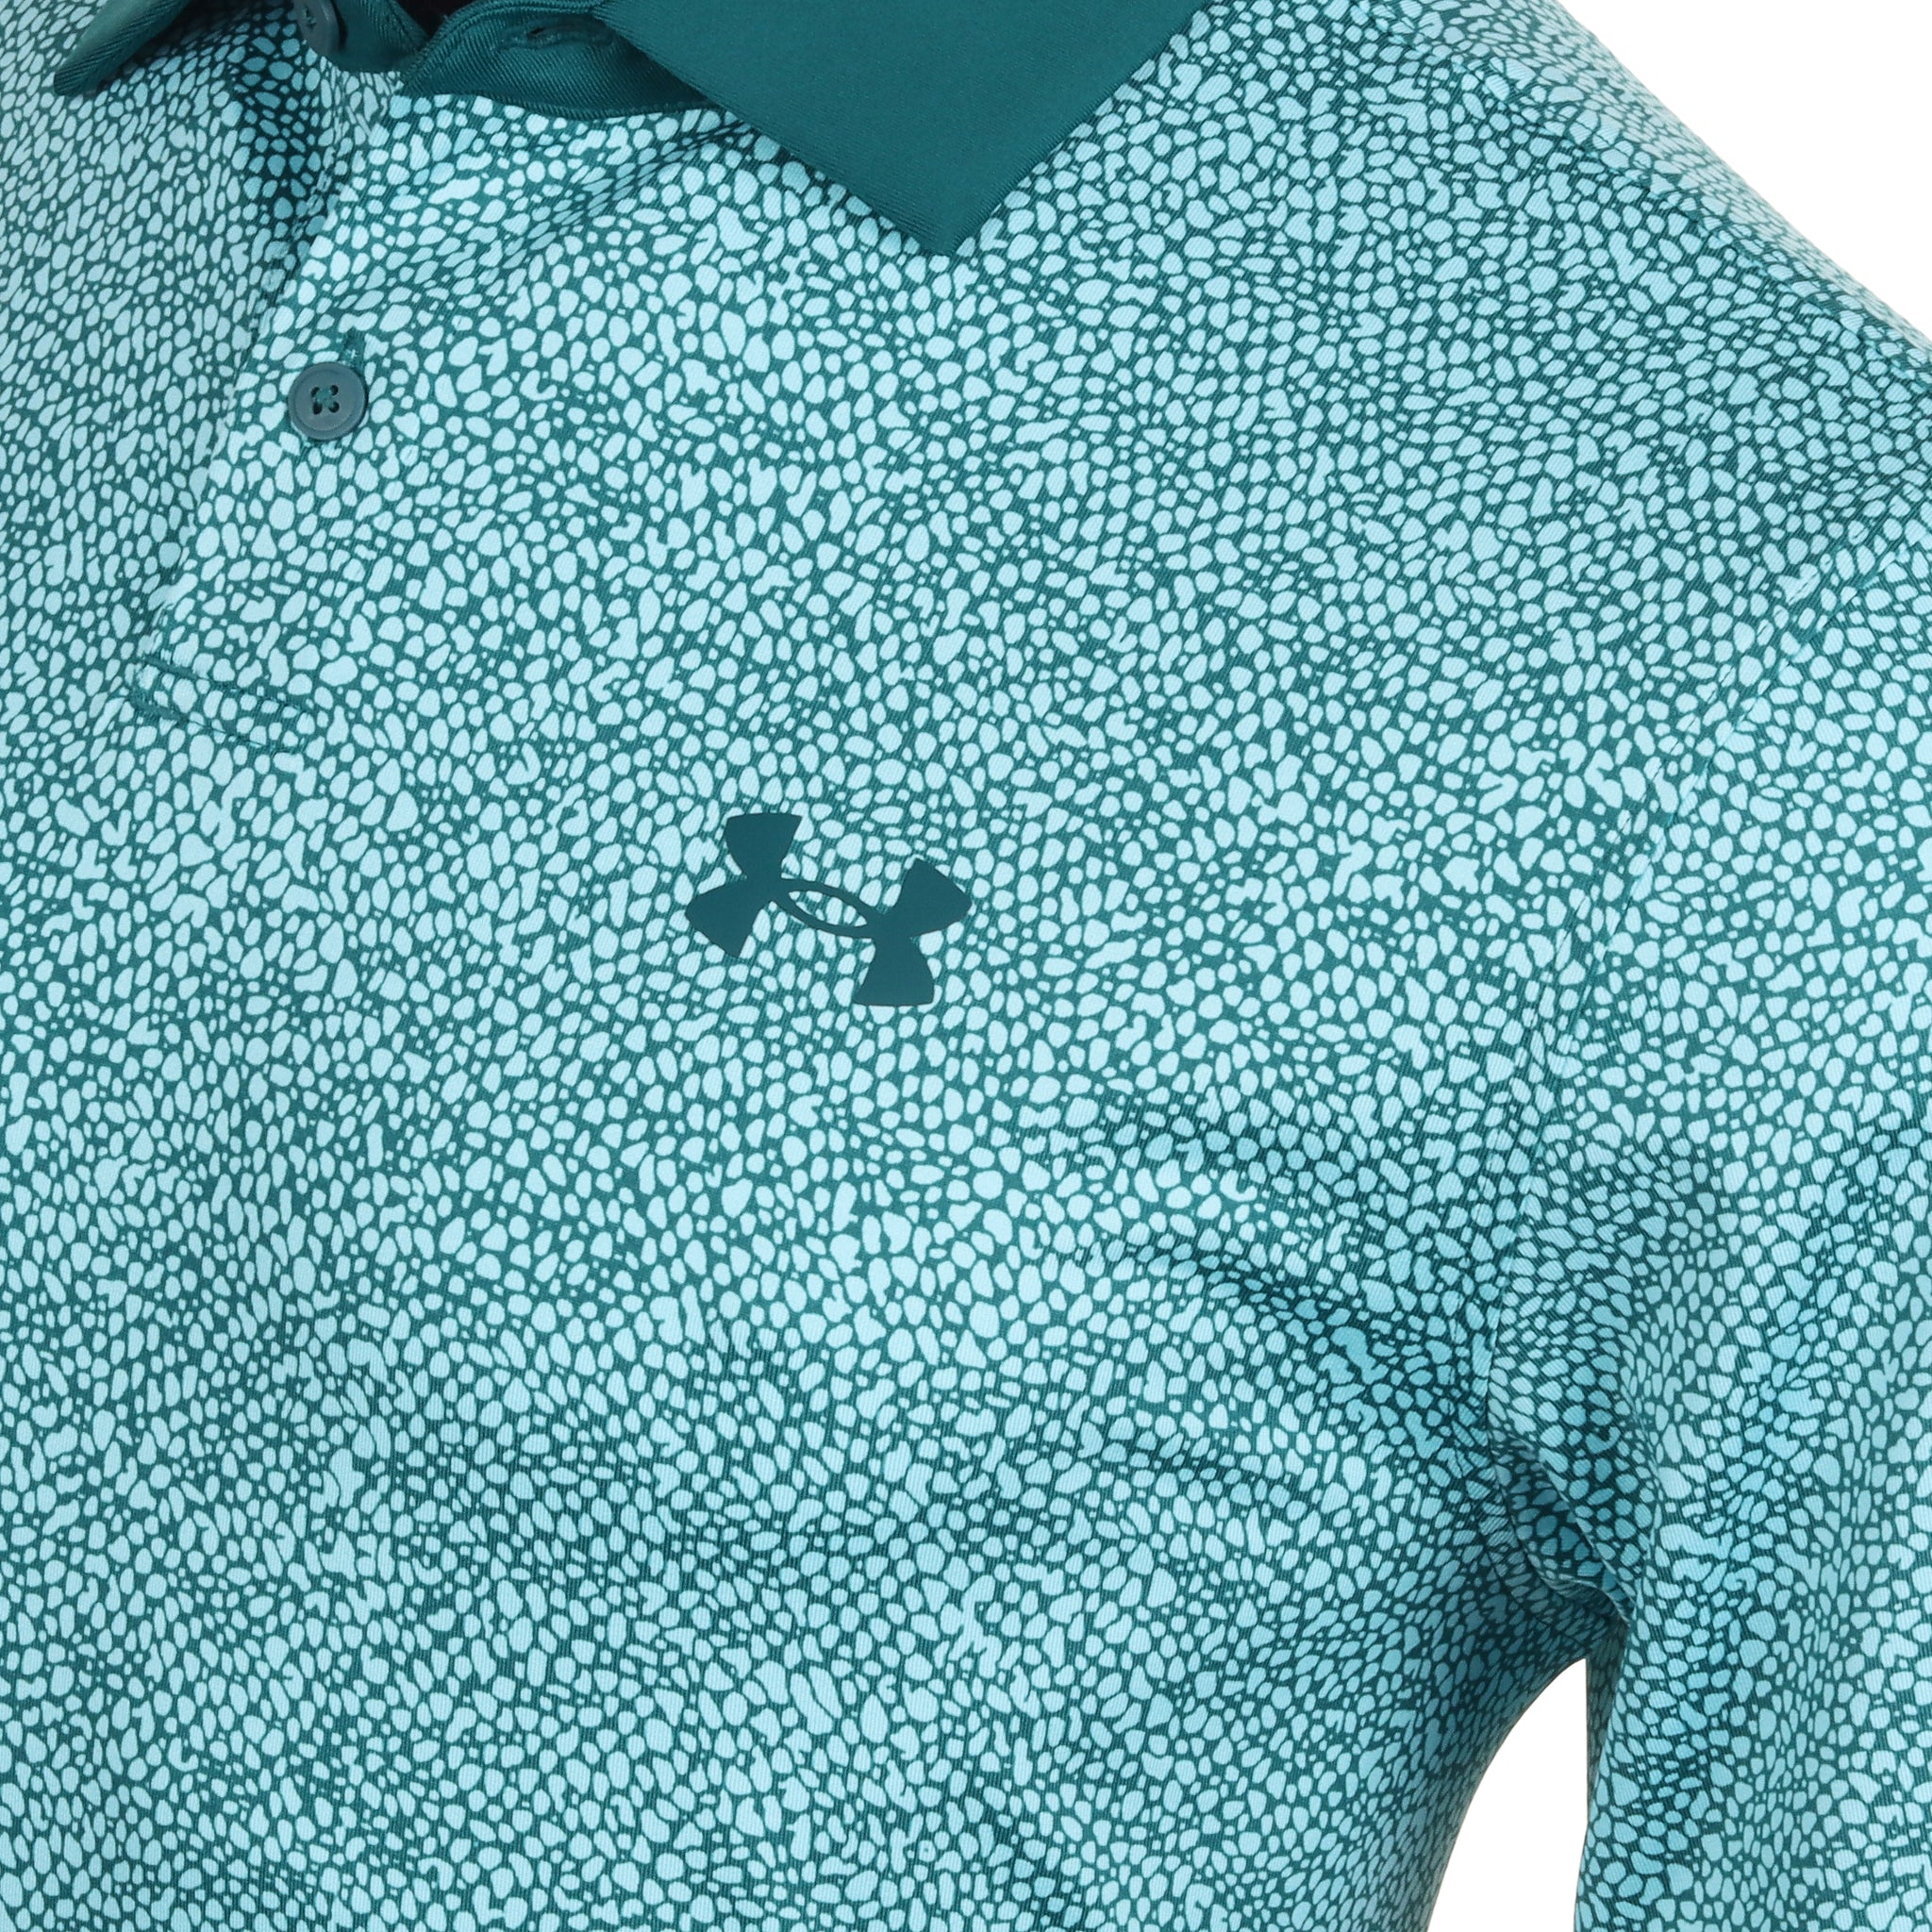 under-armour-golf-t2g-printed-shirt-1383715-sky-blue-hydro-teal-914